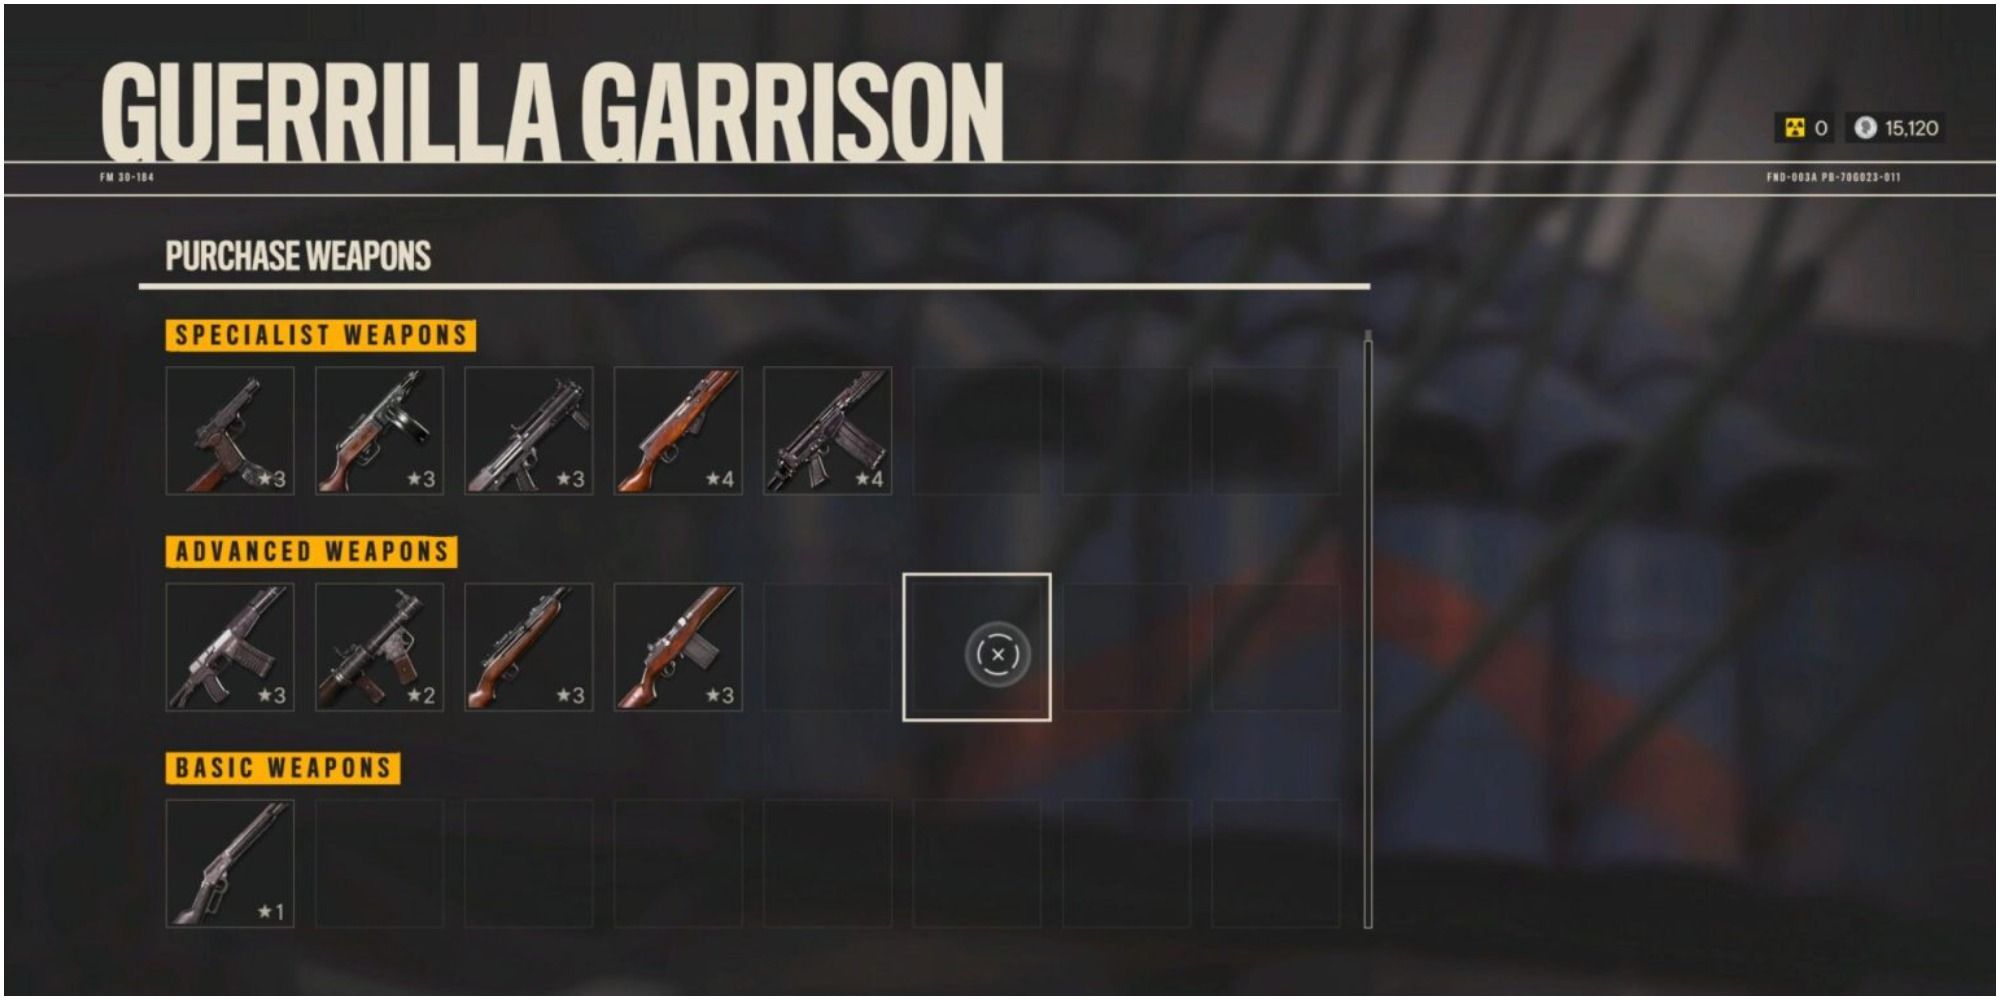 Far Cry 6 Guerrilla Garrison gun merchant screen